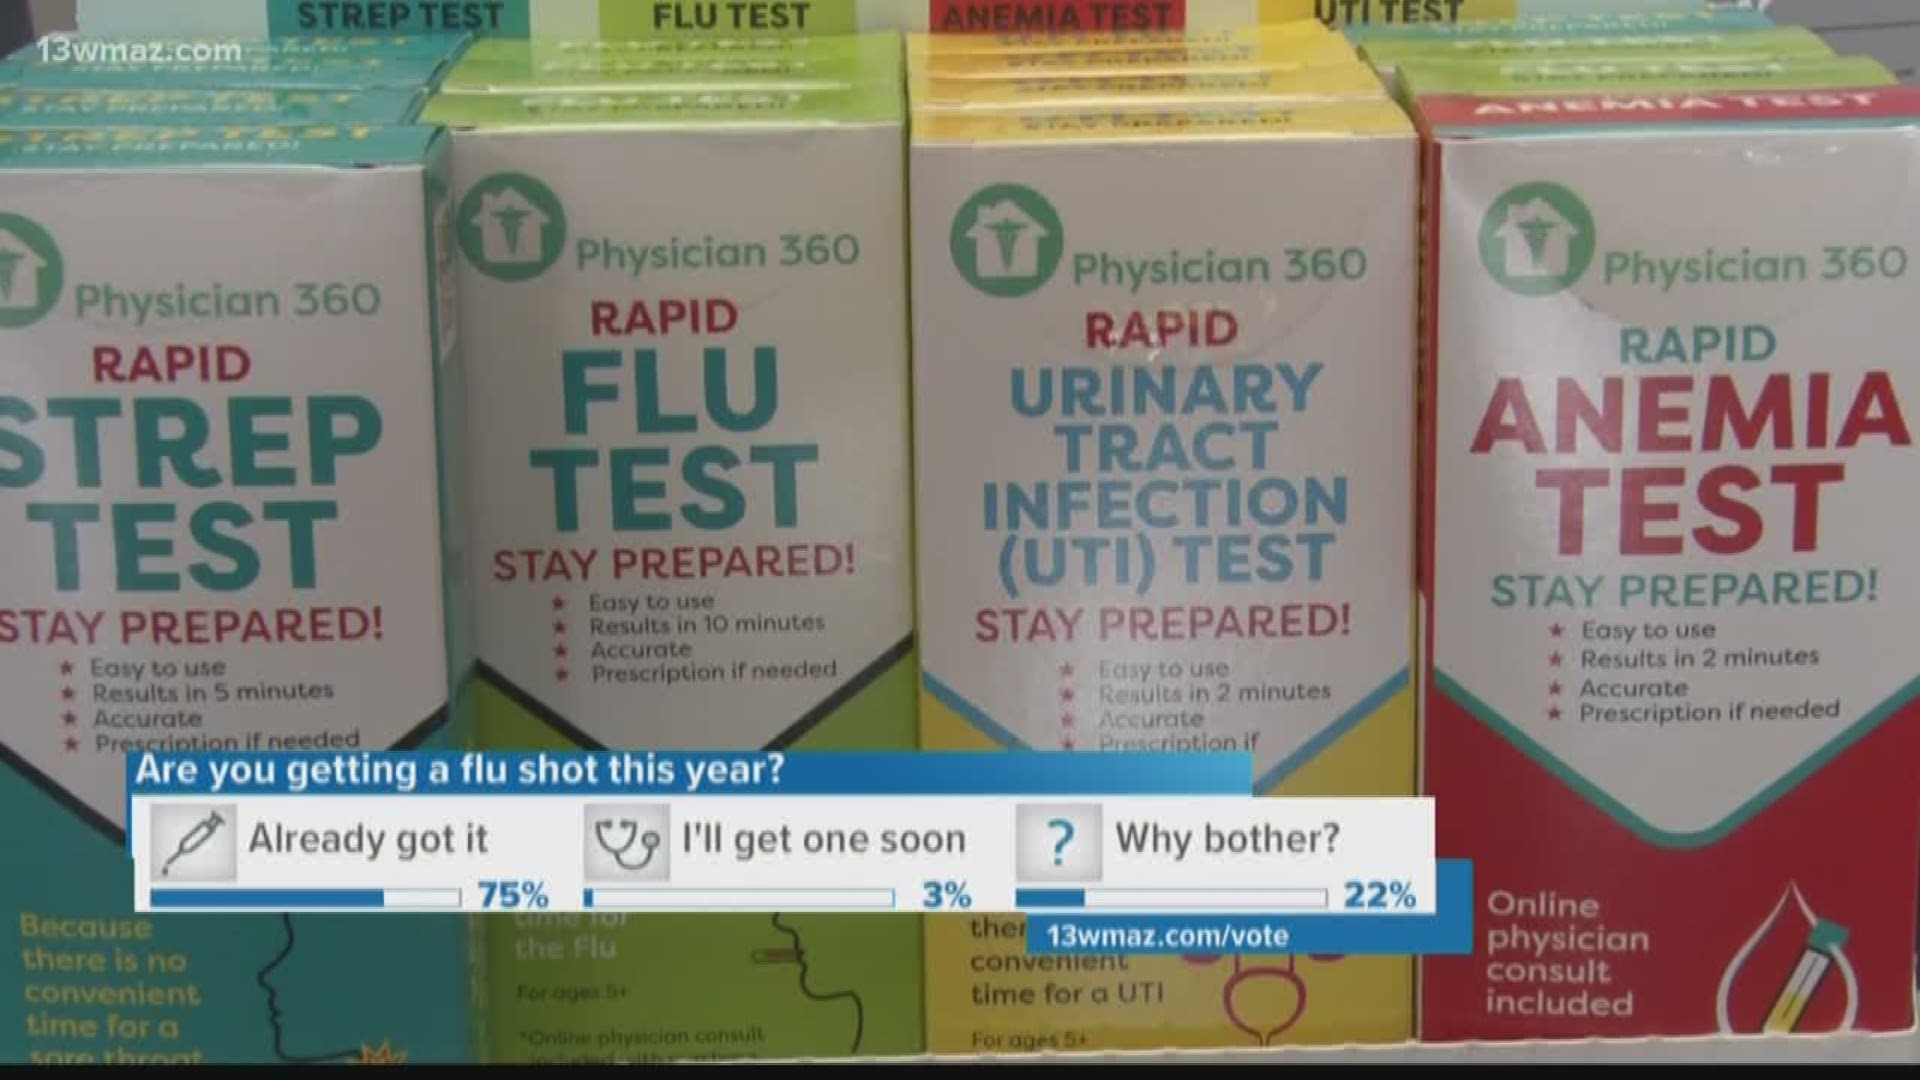 New self-testing flu kit available at Warner Robins pharmacy